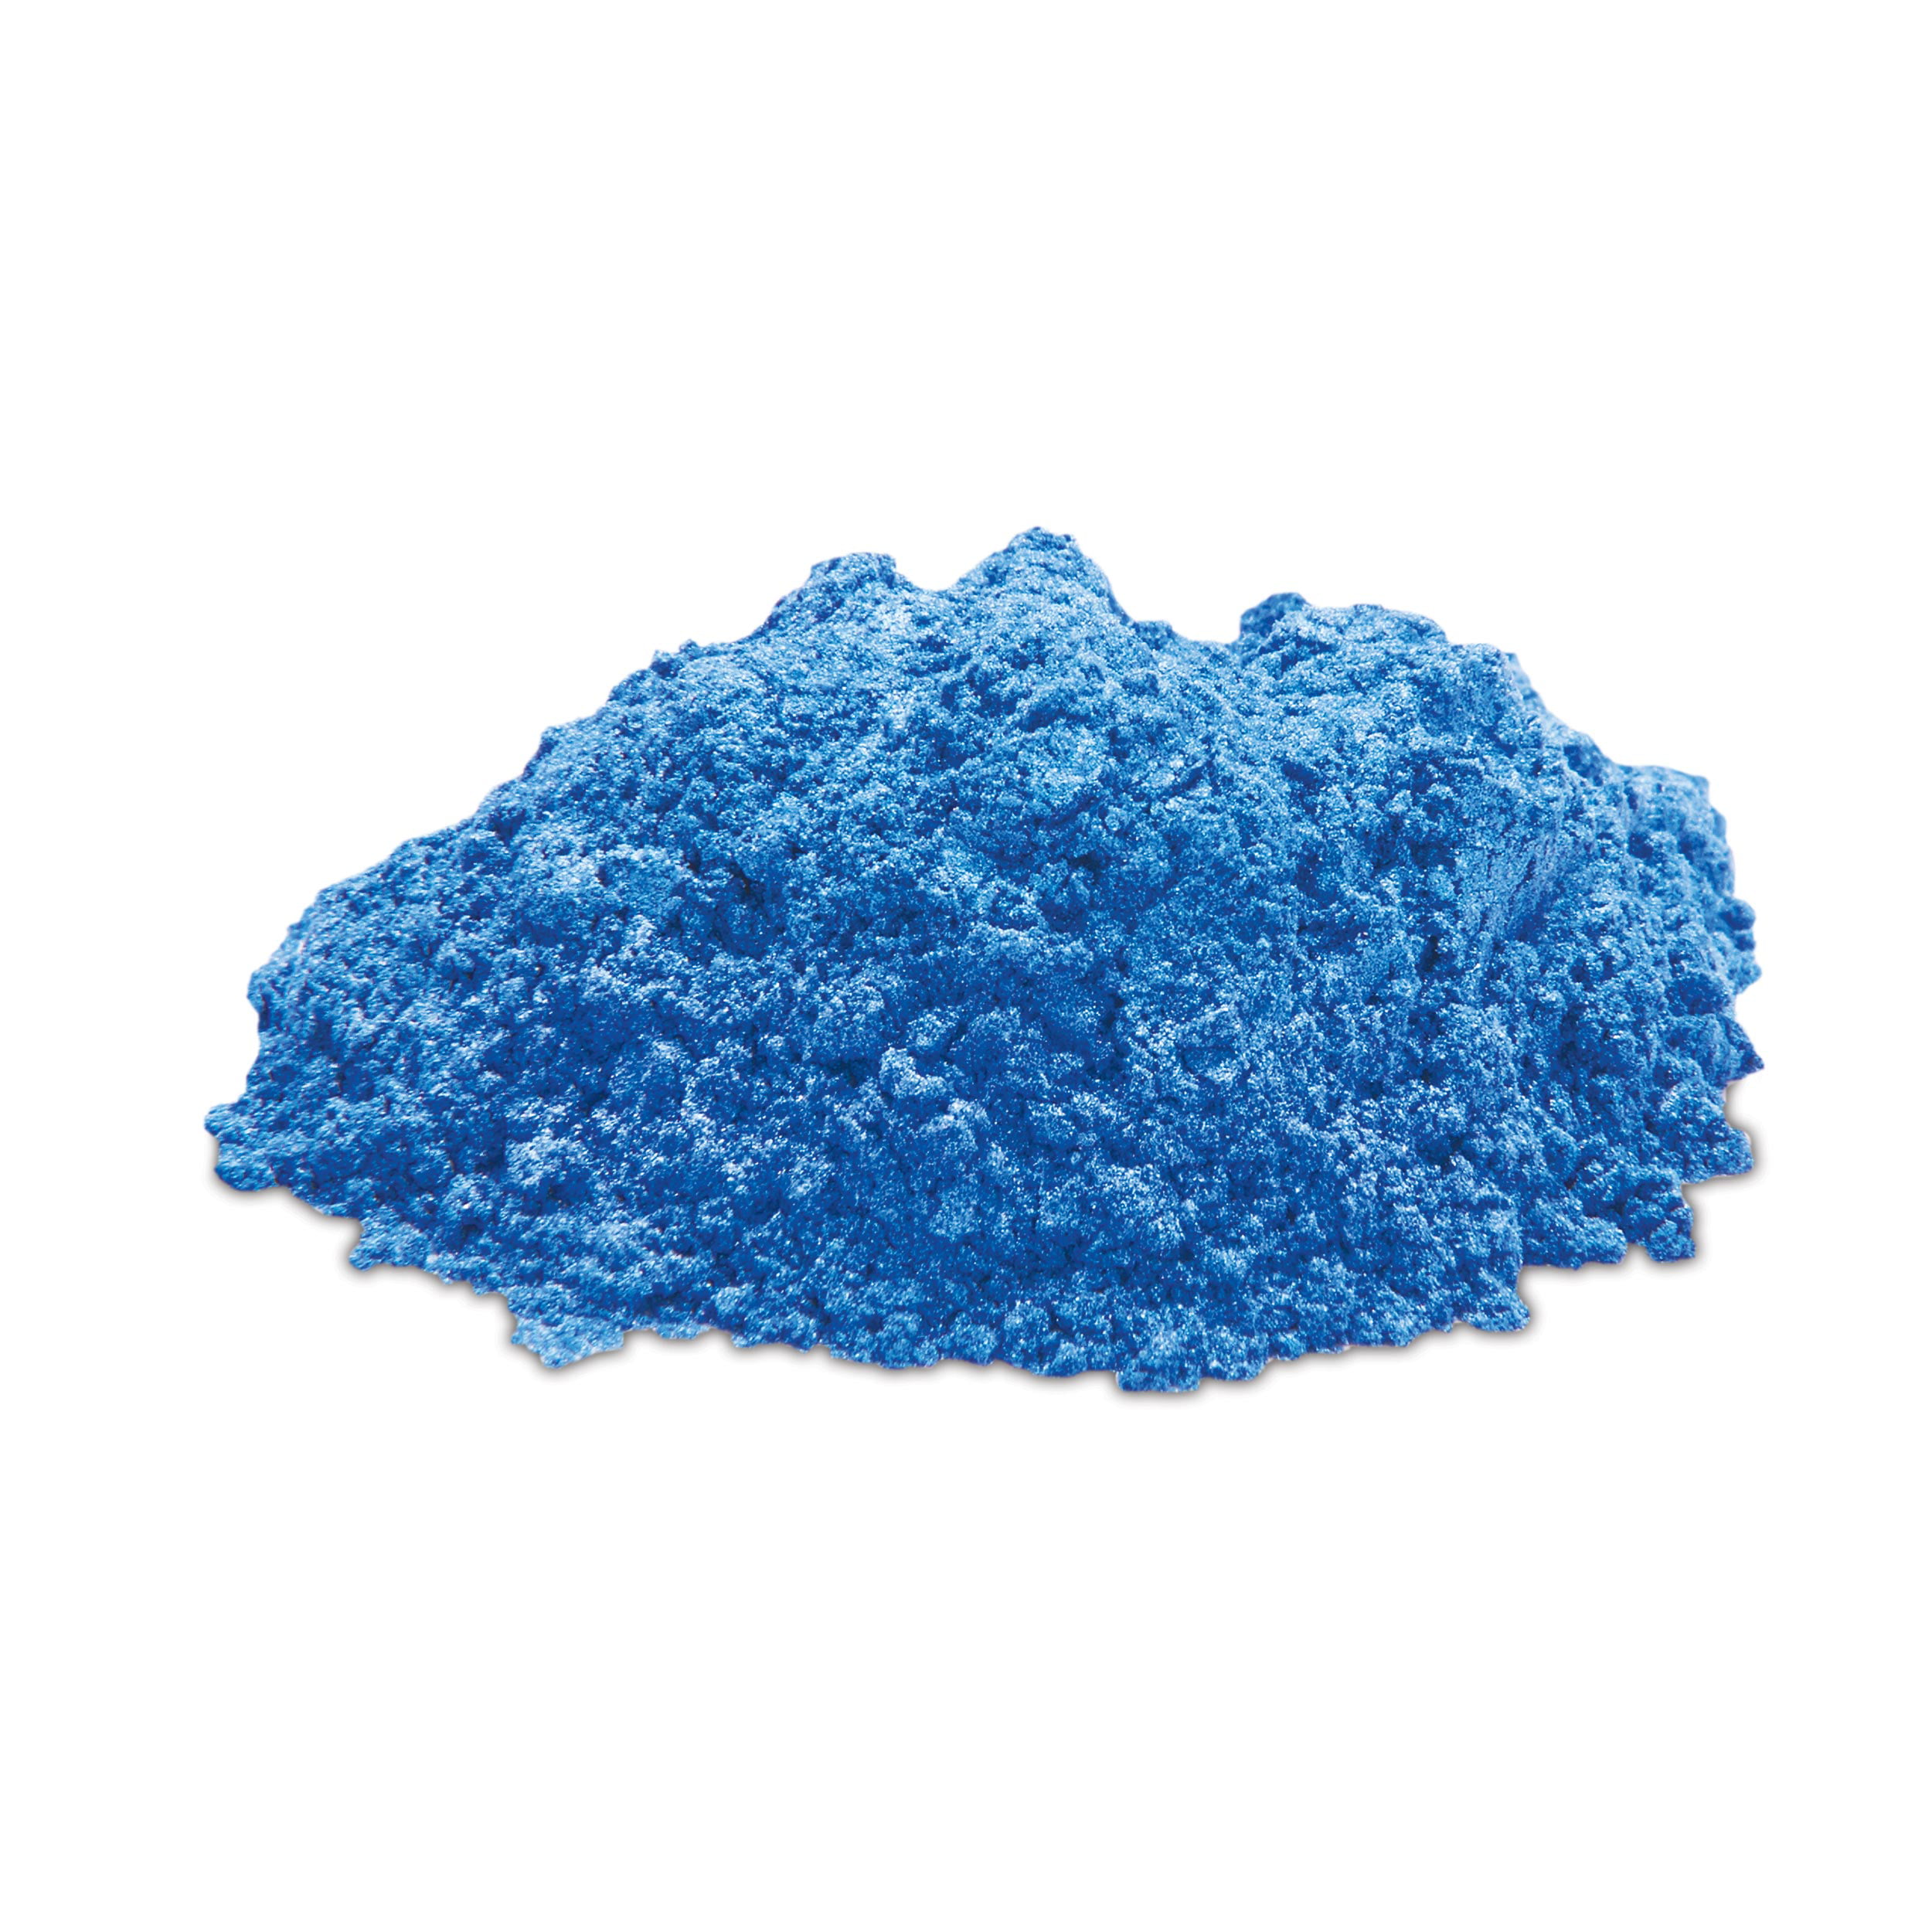 Alumilite PolyColor Resin Powder